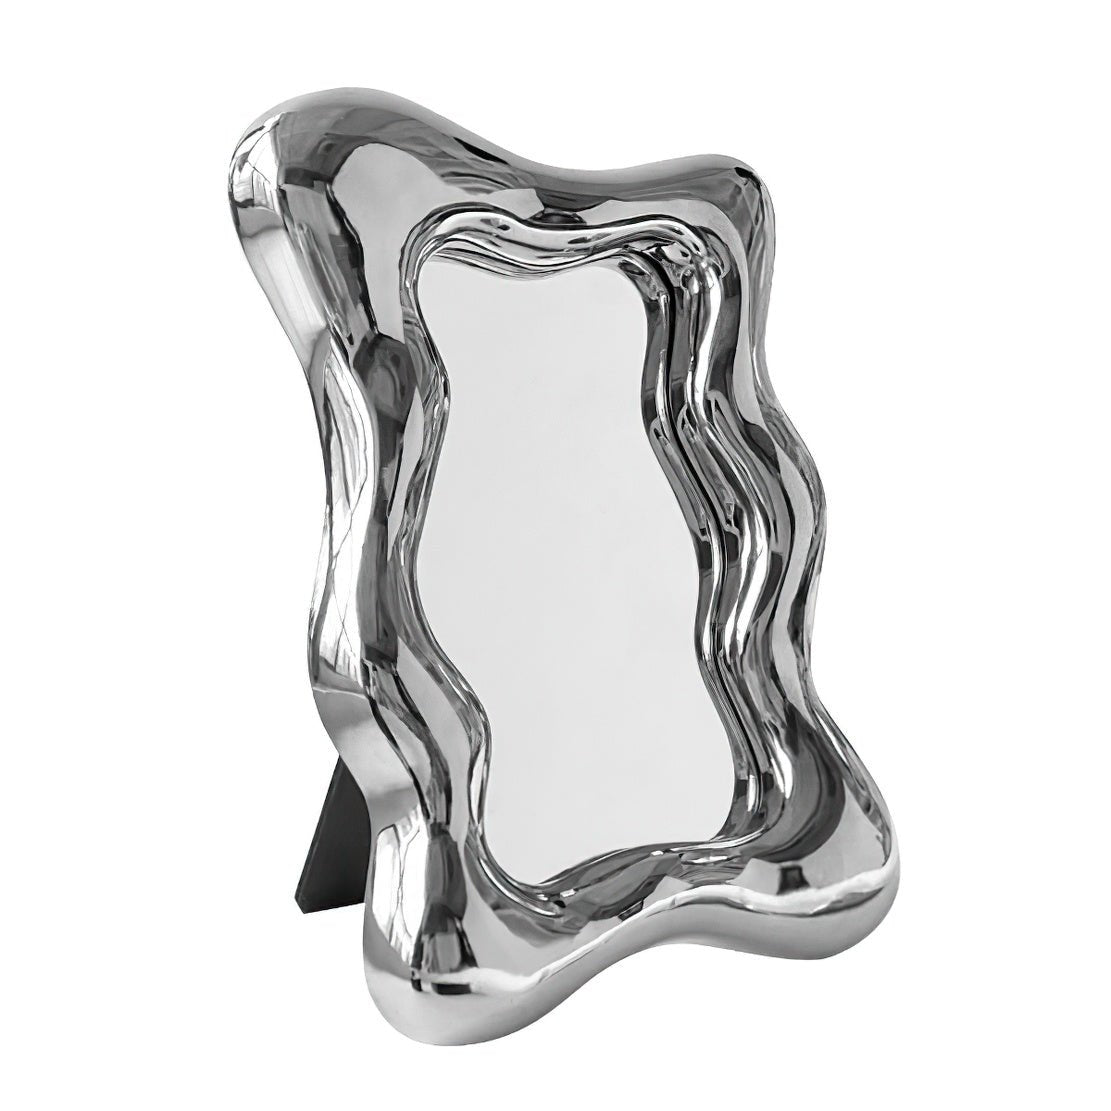 Asymmetrical silver frame funky mirror